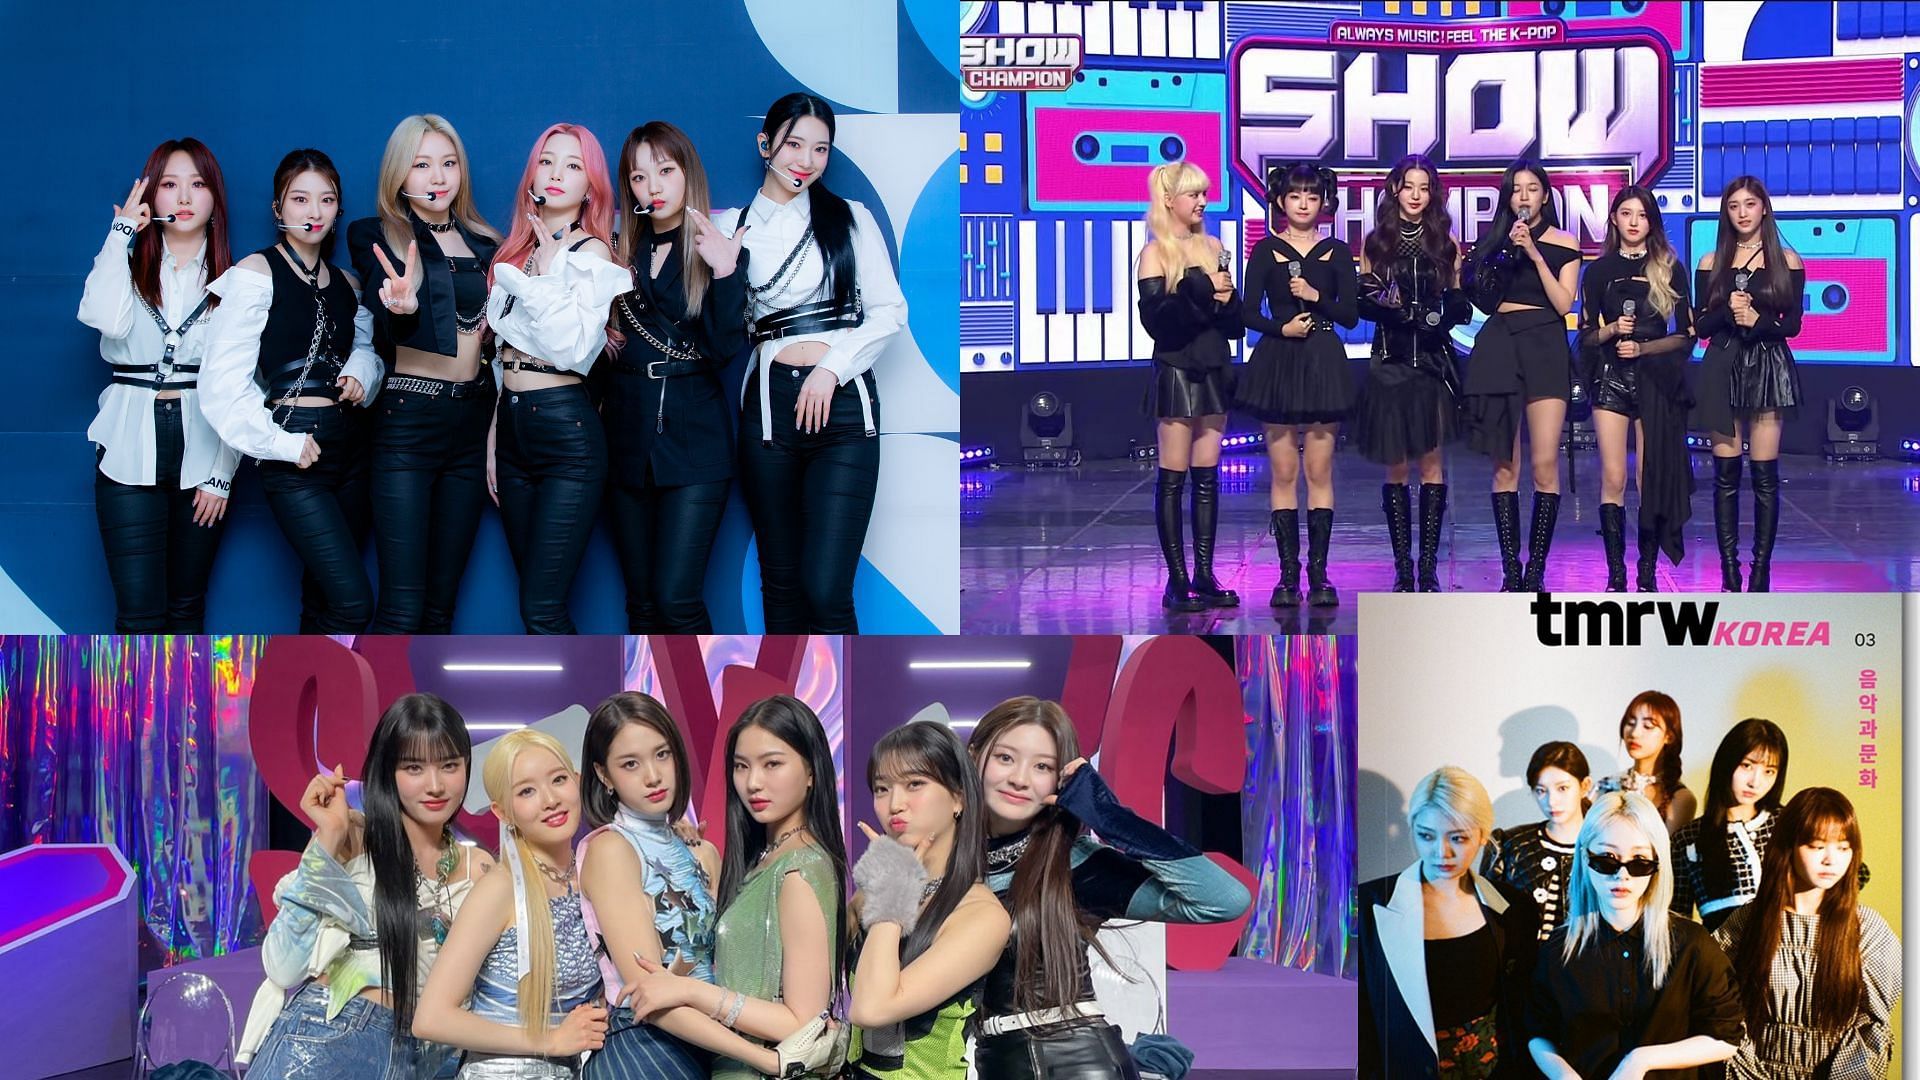 There are many six-member K-pop girl groups (Image via Sportskeeda)